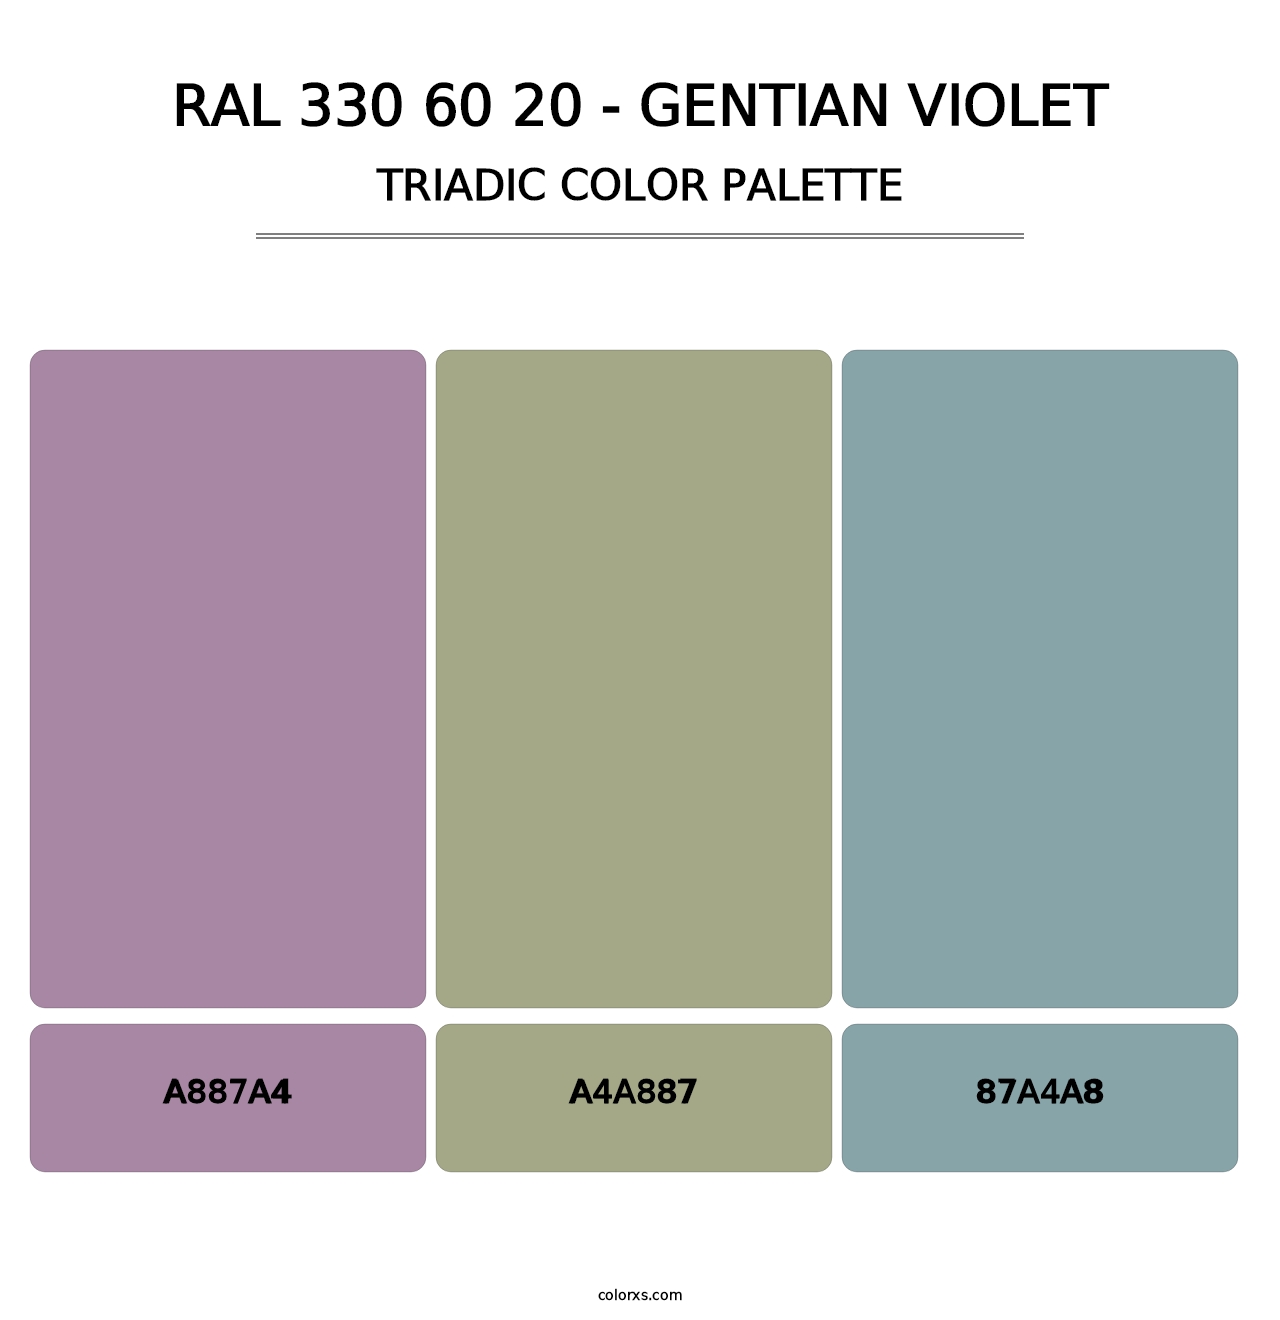 RAL 330 60 20 - Gentian Violet - Triadic Color Palette